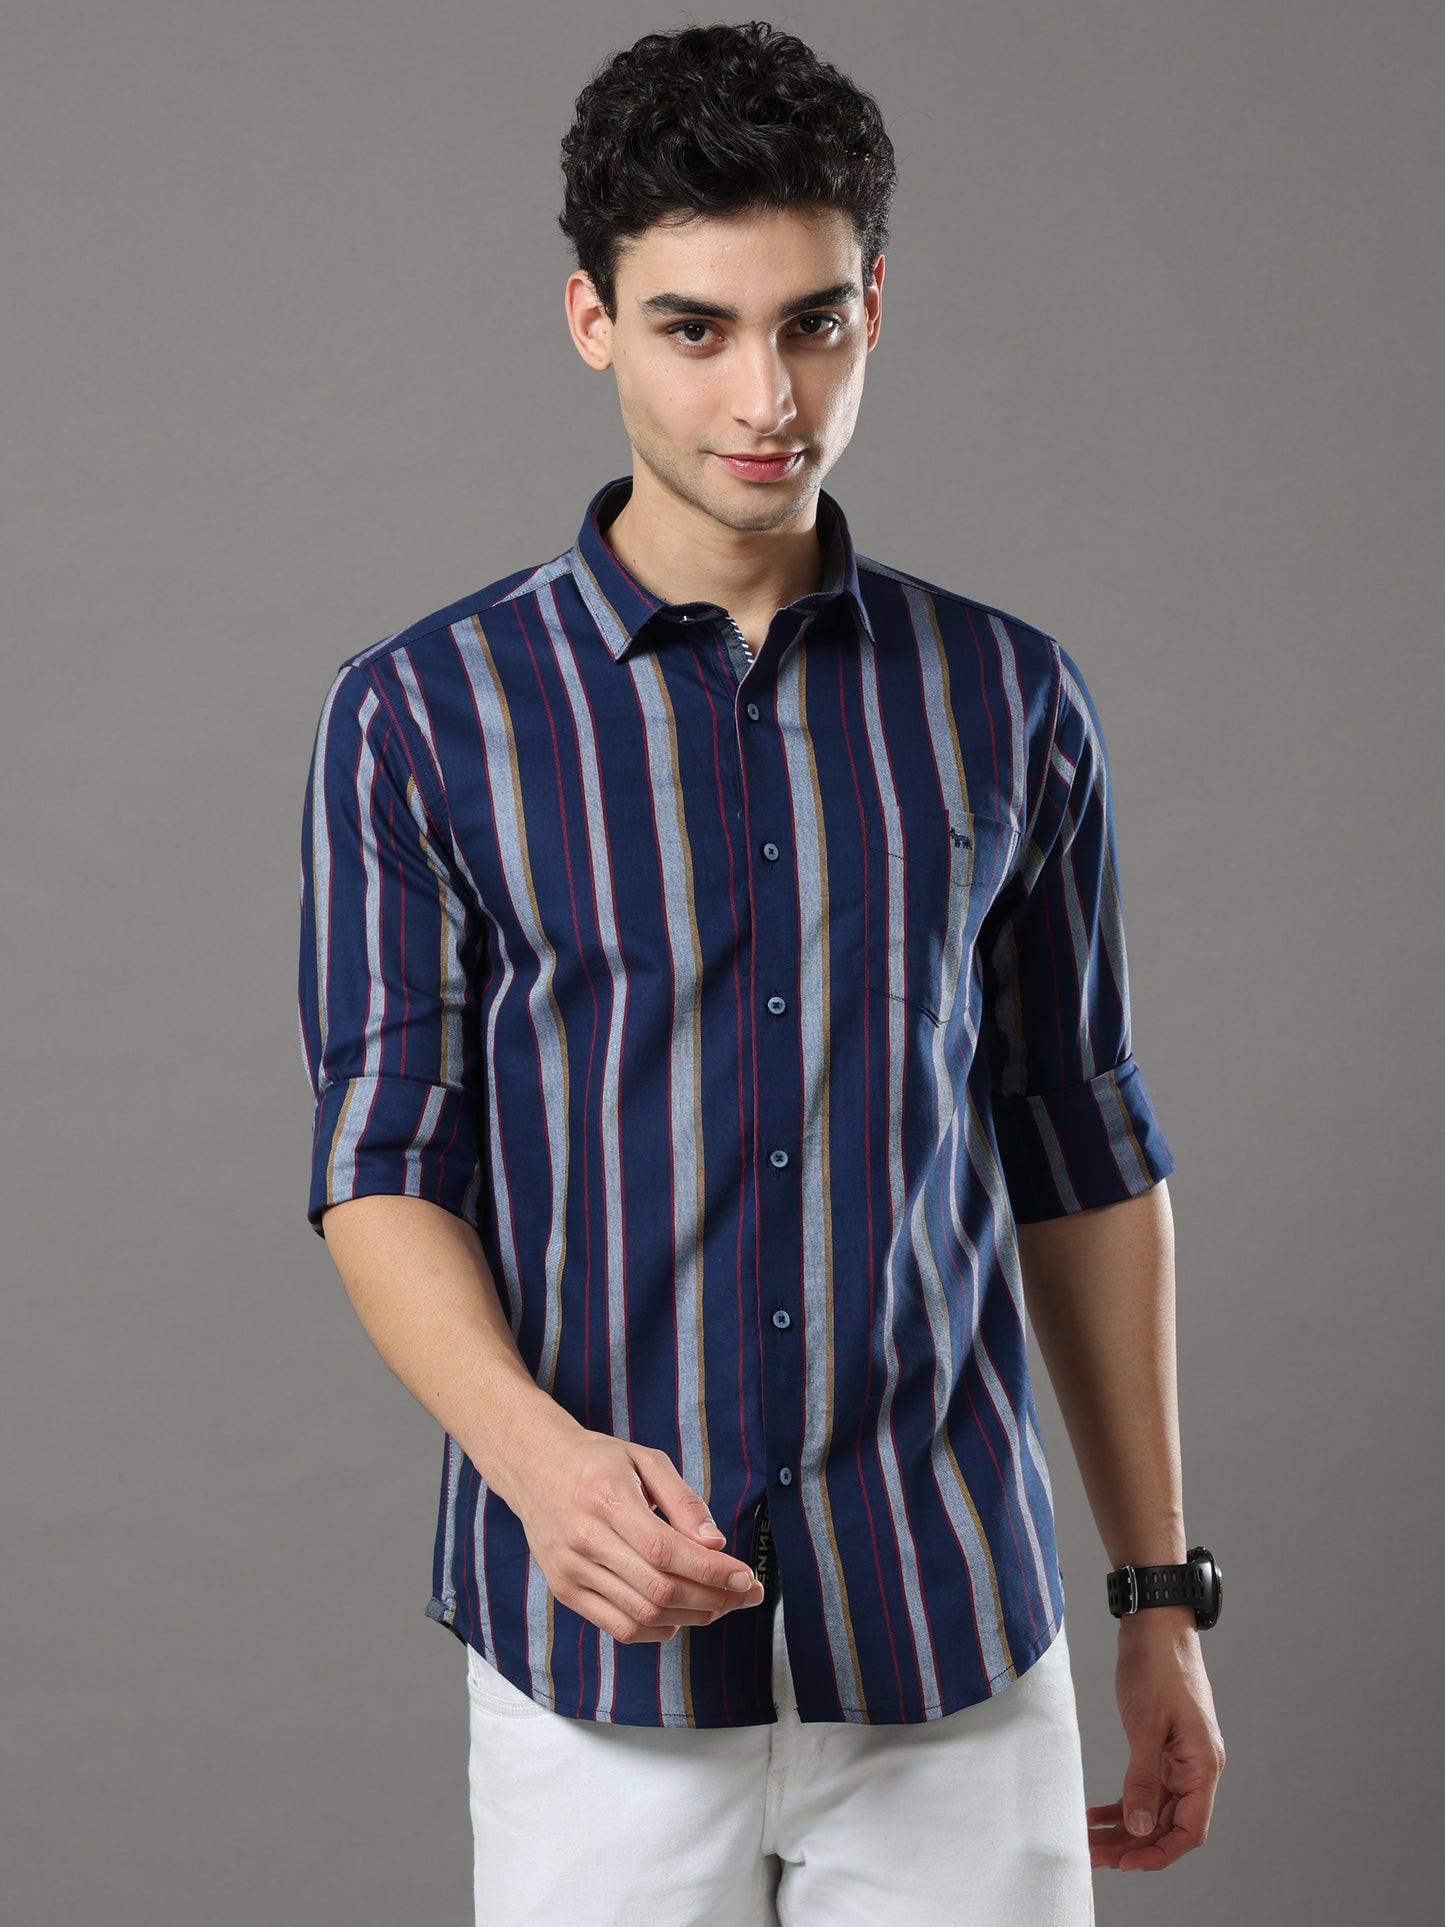 Blue And Grey Stripes Shirt